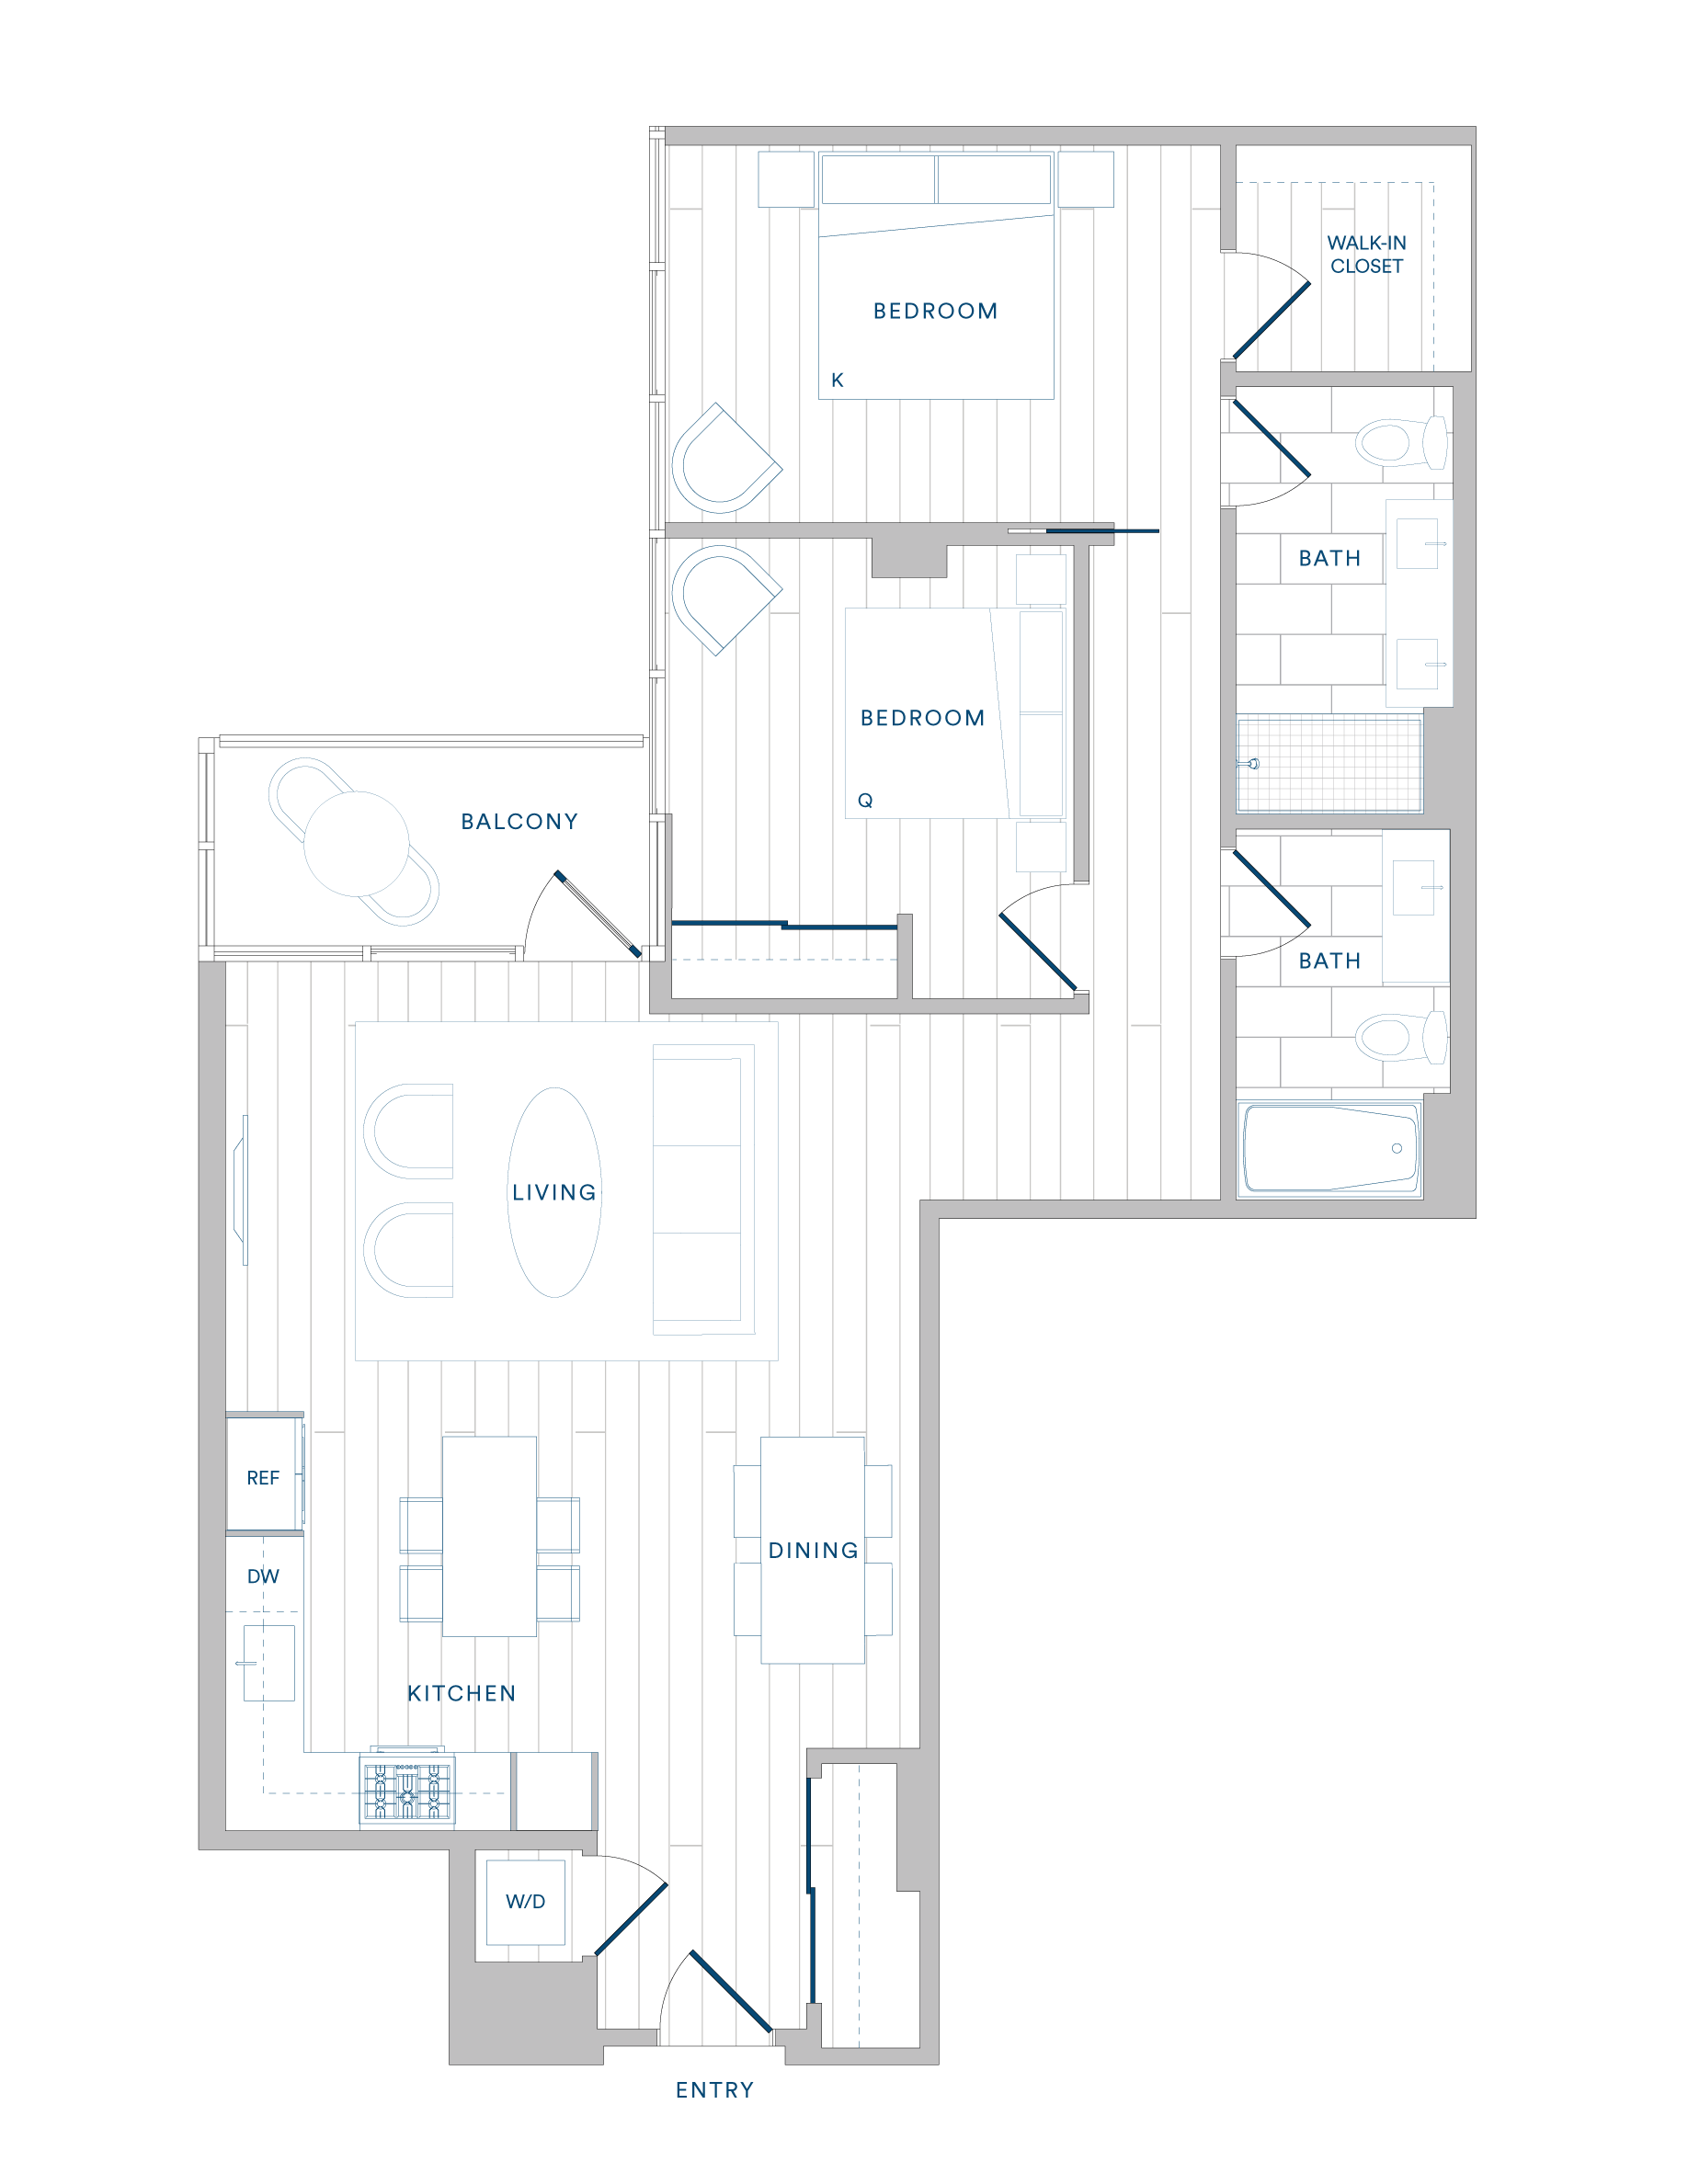 Floorplan for Apartment #1316, 2 bedroom unit at Margarite